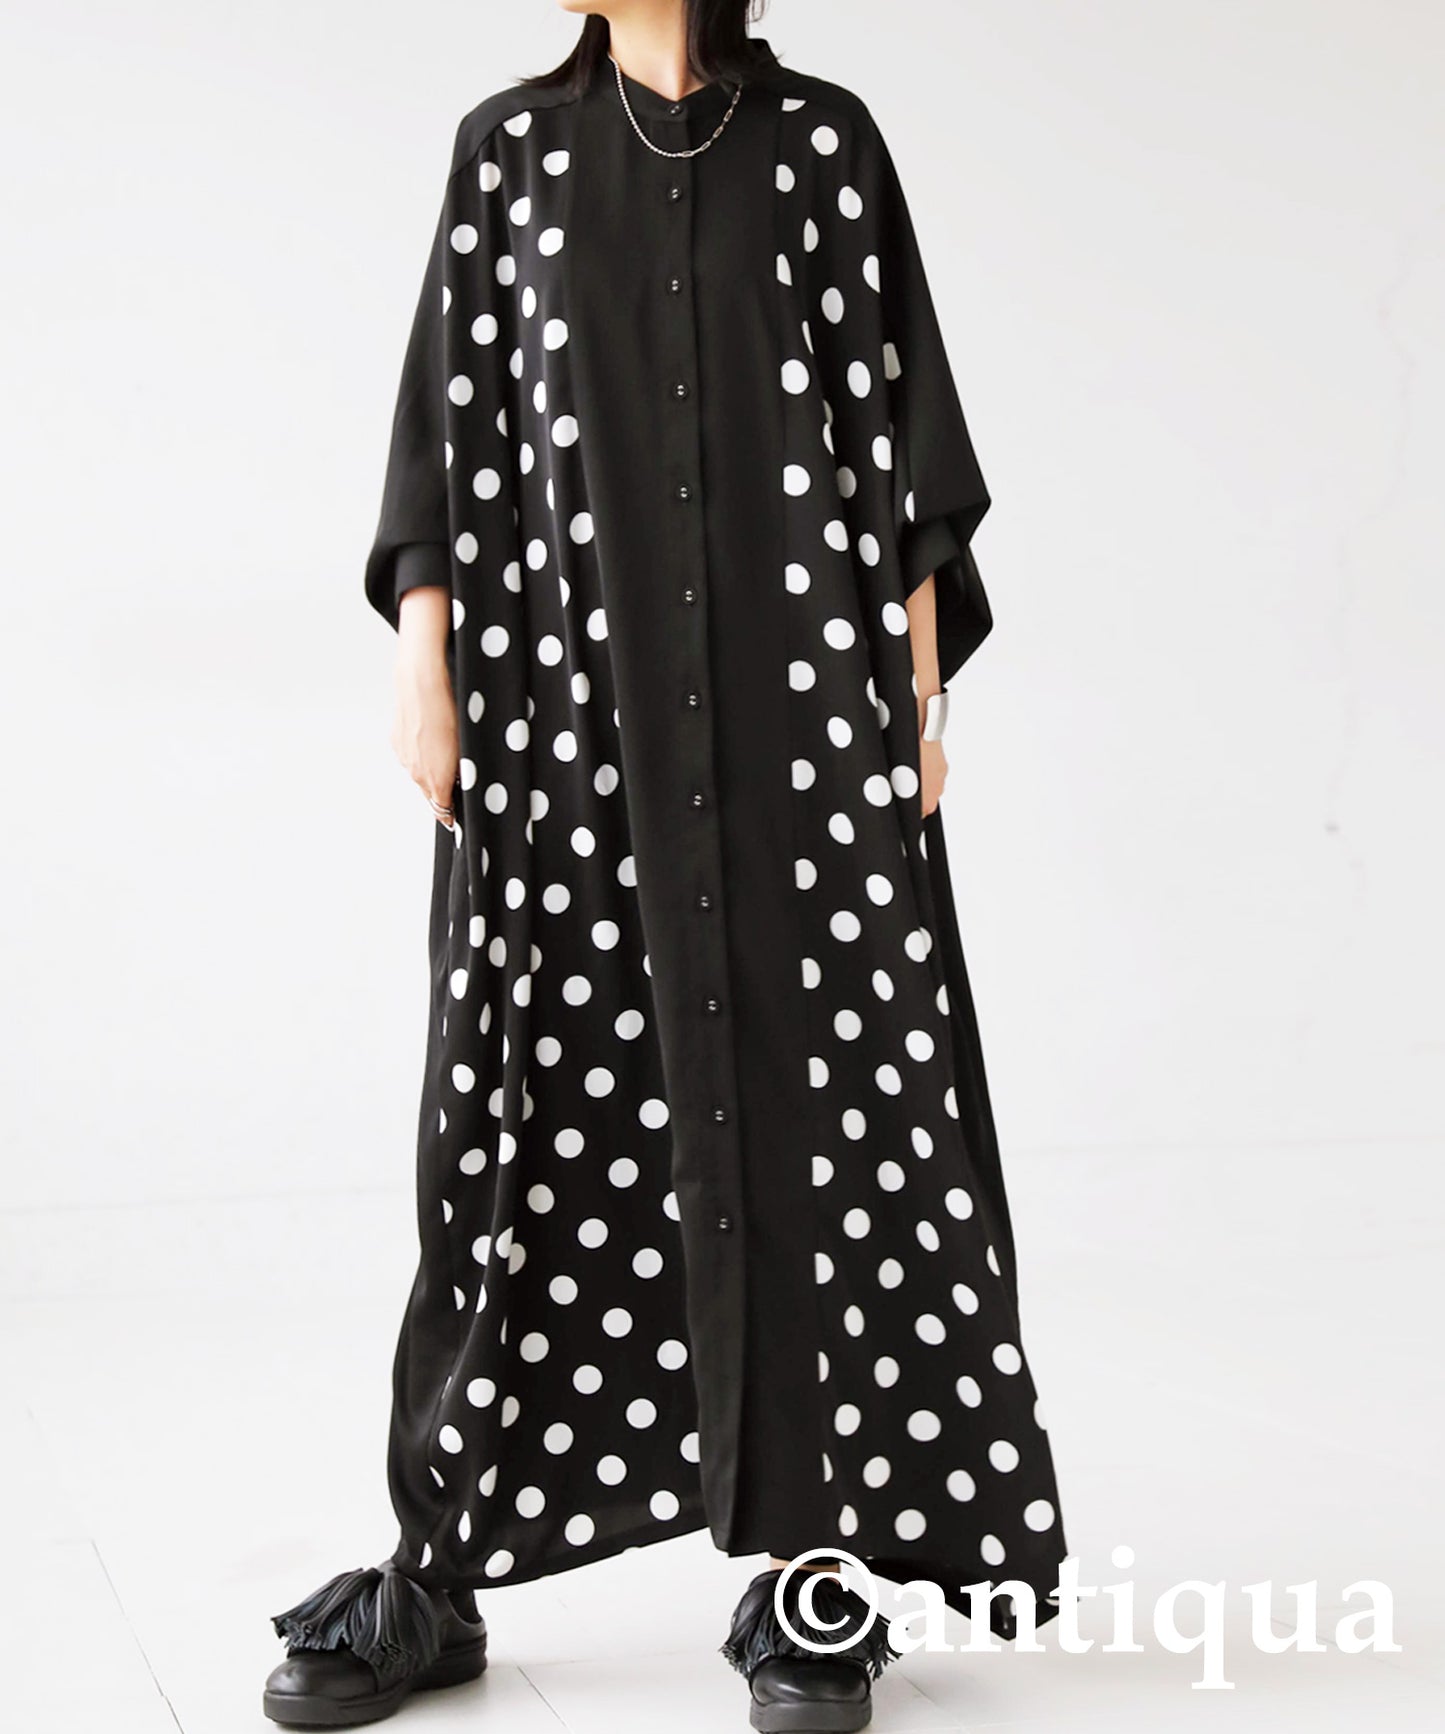 Dot pattern Ladies Casual shirt Long dress